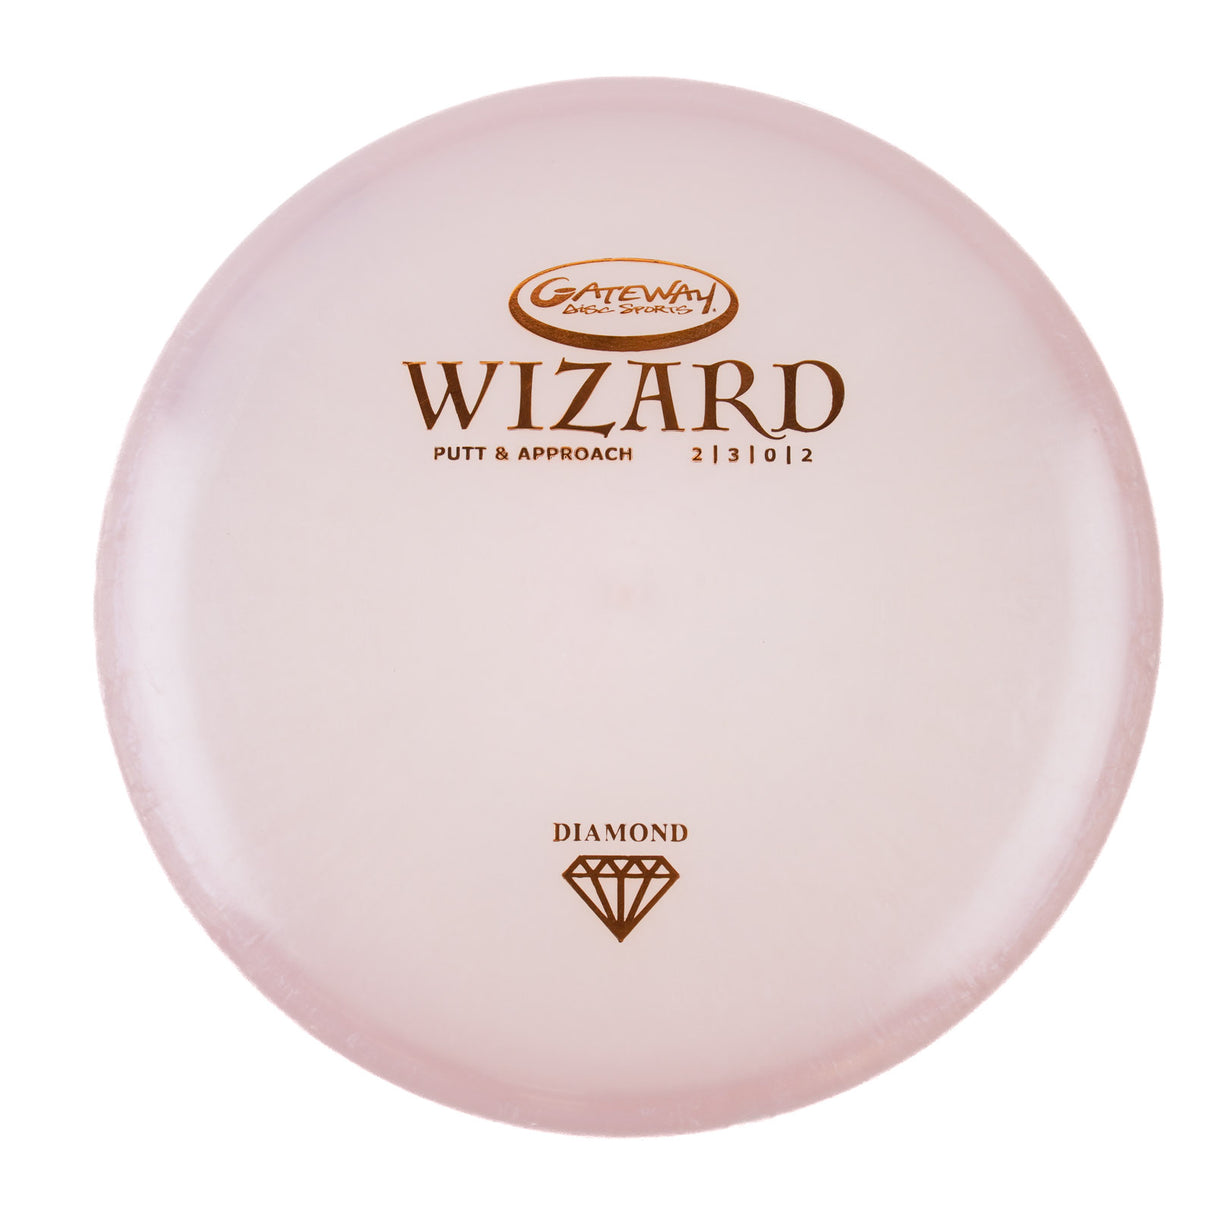 Gateway Wizard - Diamond 175g | Style 0001